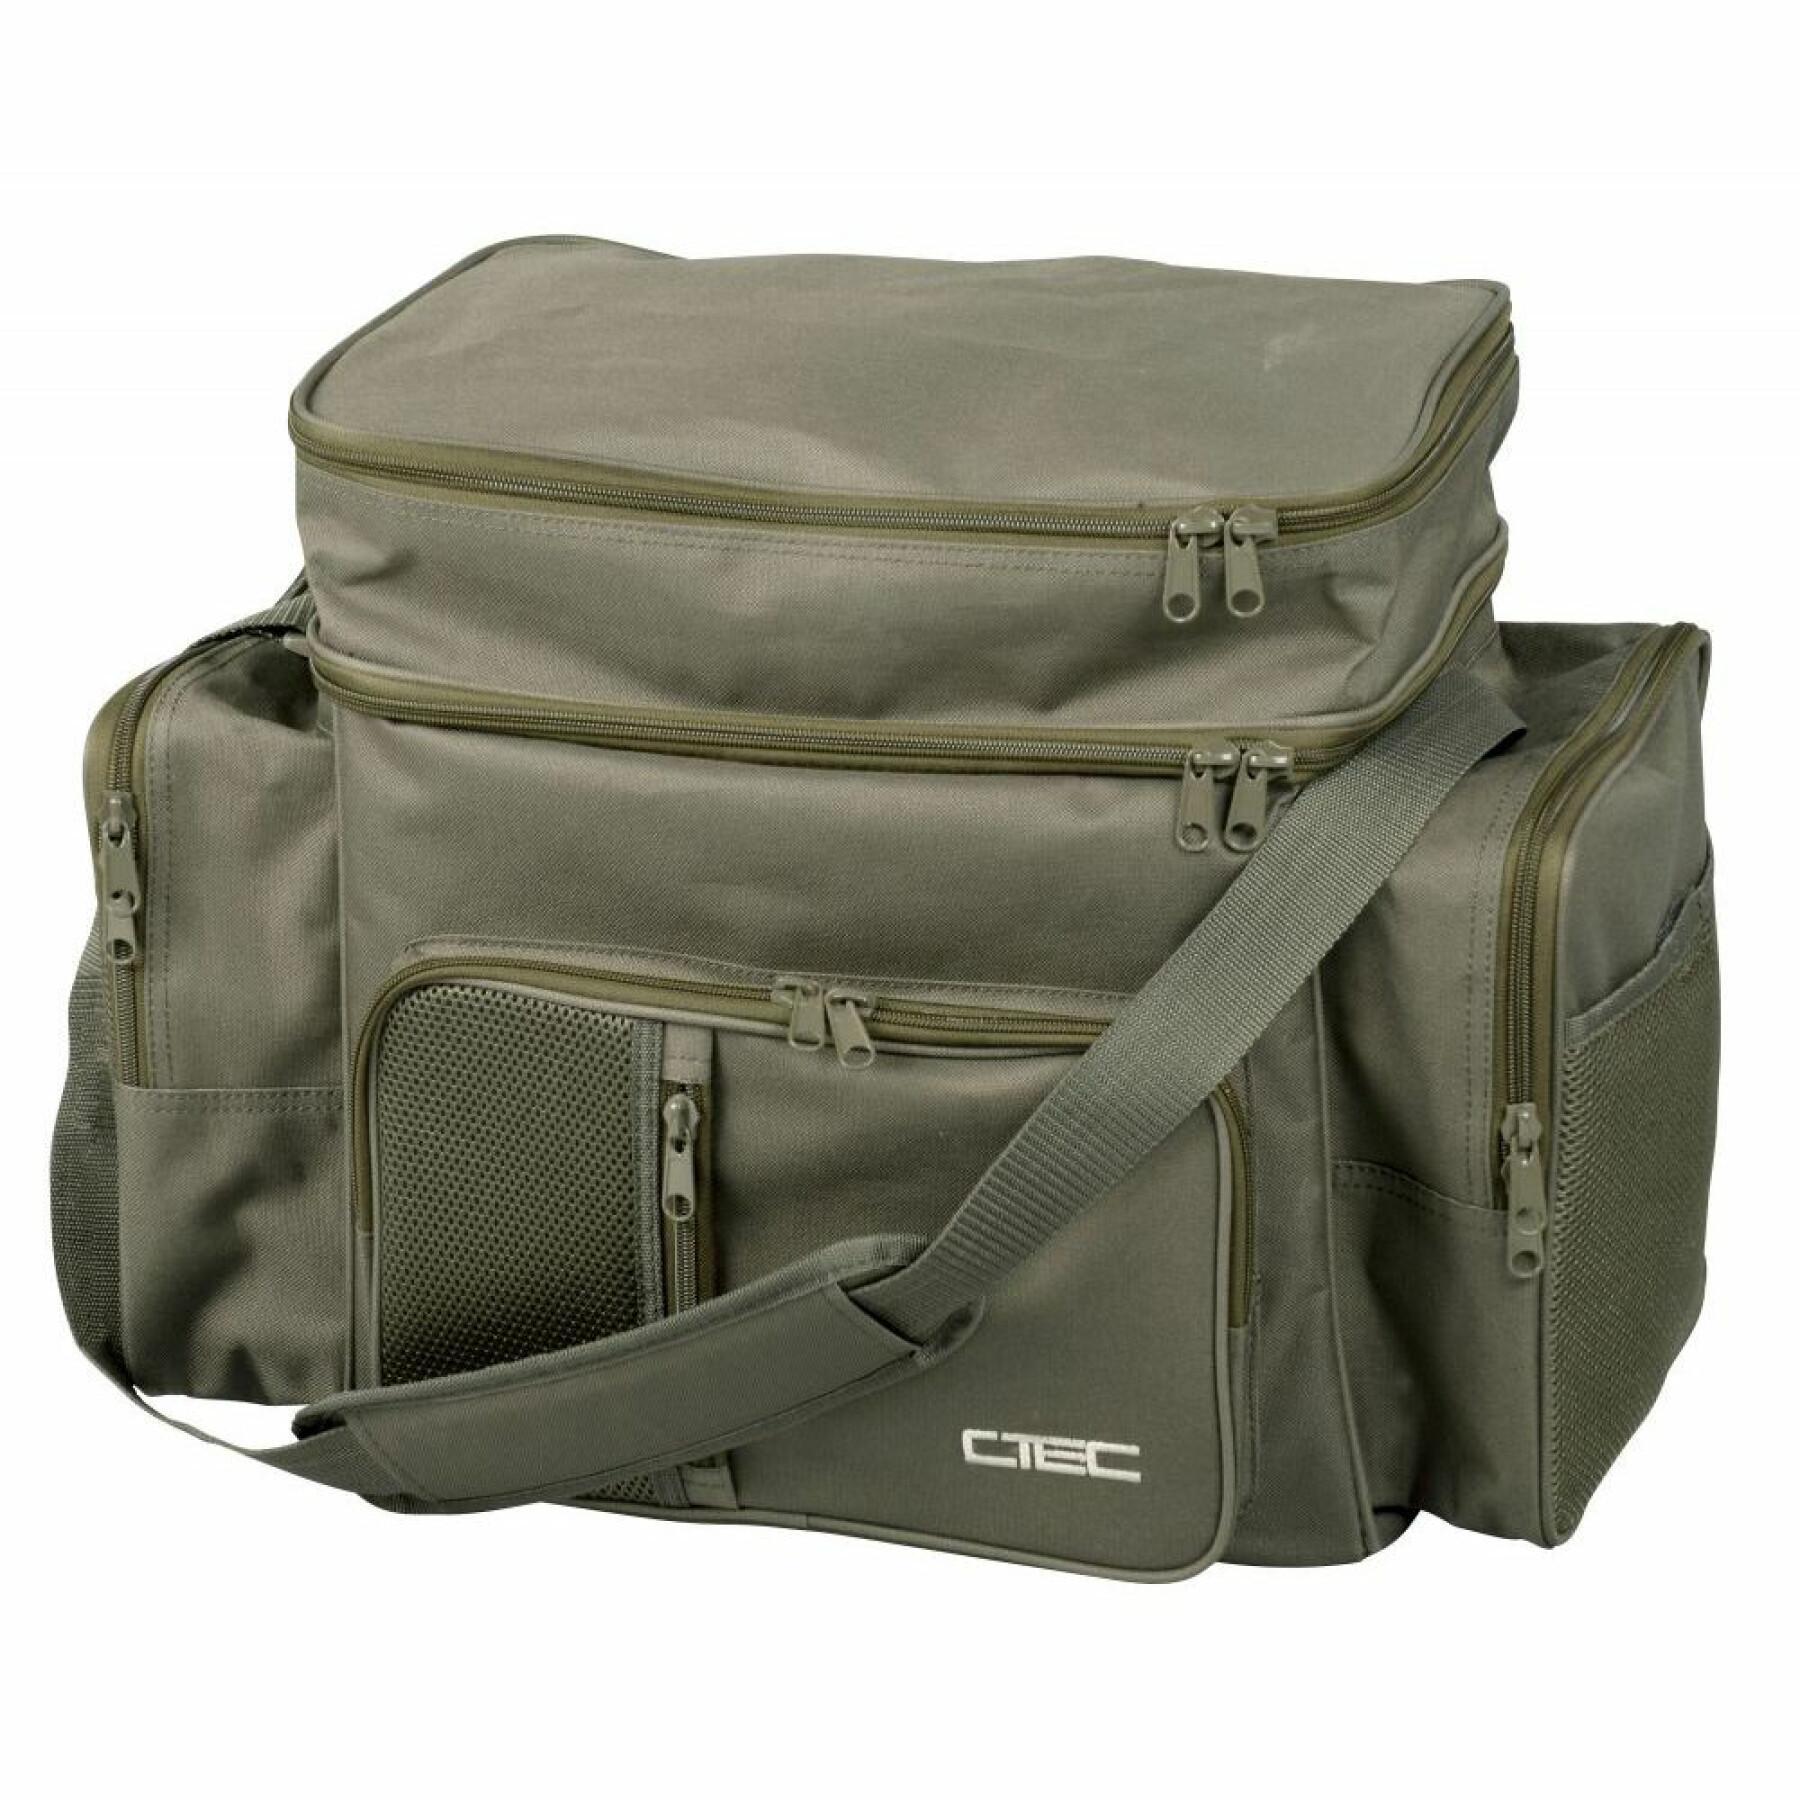 Carry all C-Tec base bag